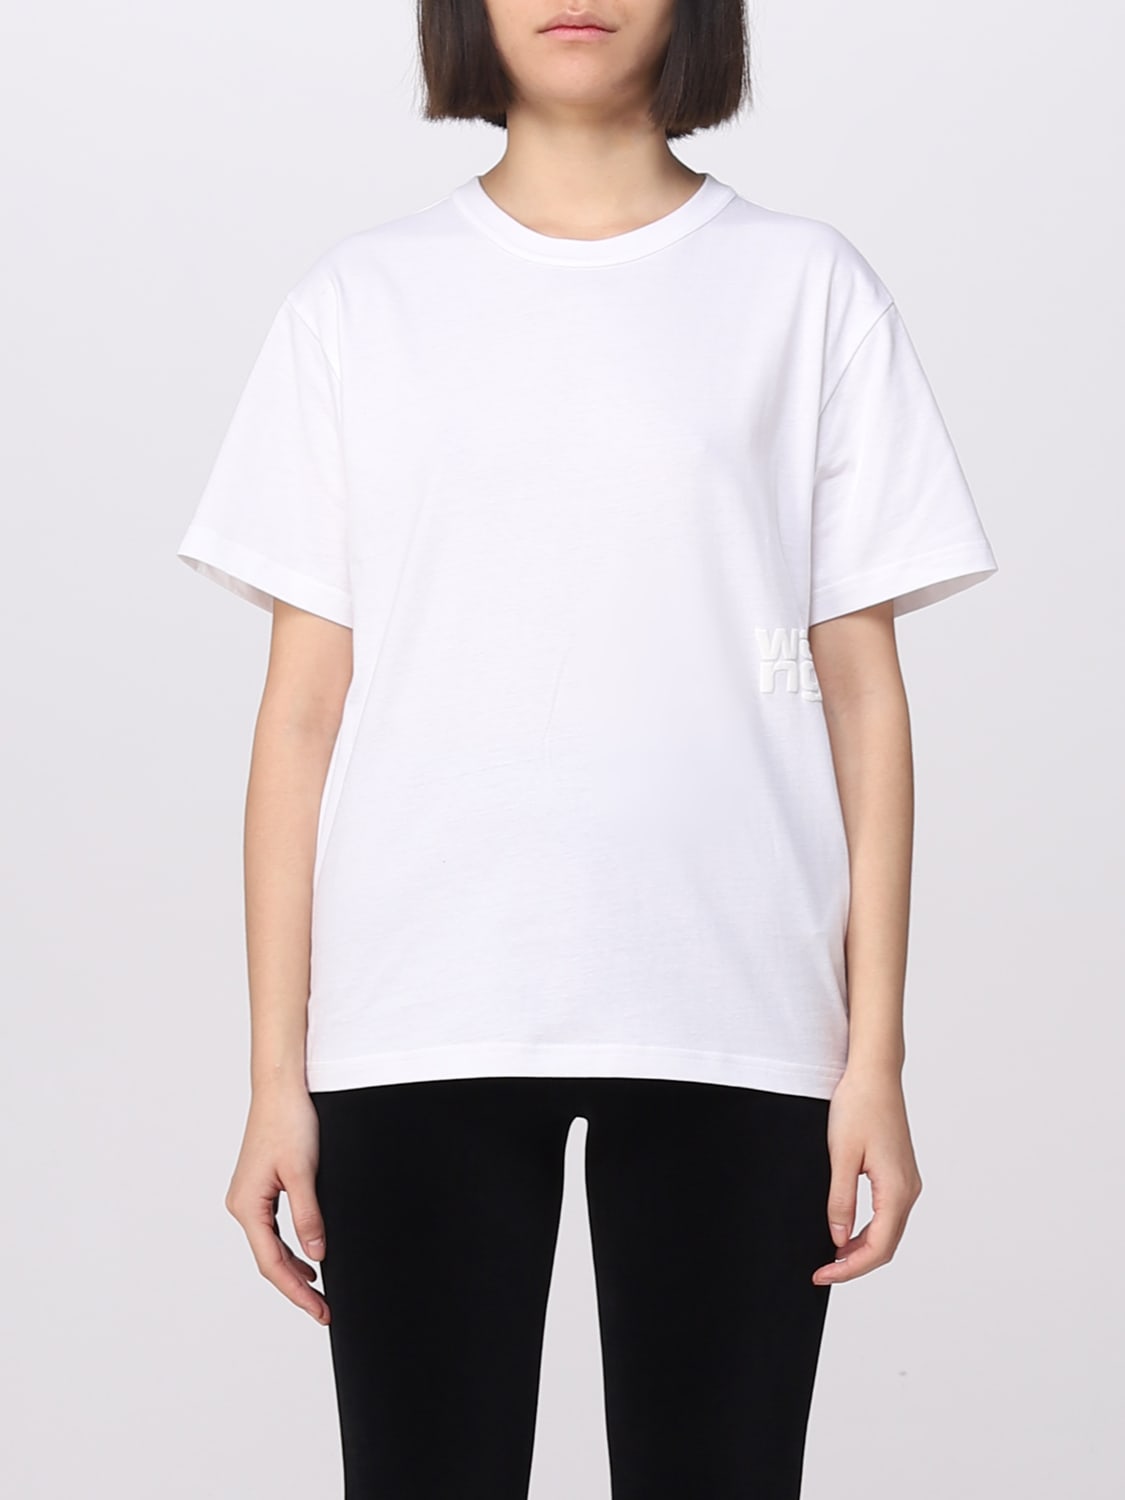 WANG: - White | Alexander Wang t-shirt 4CC3221357 online on